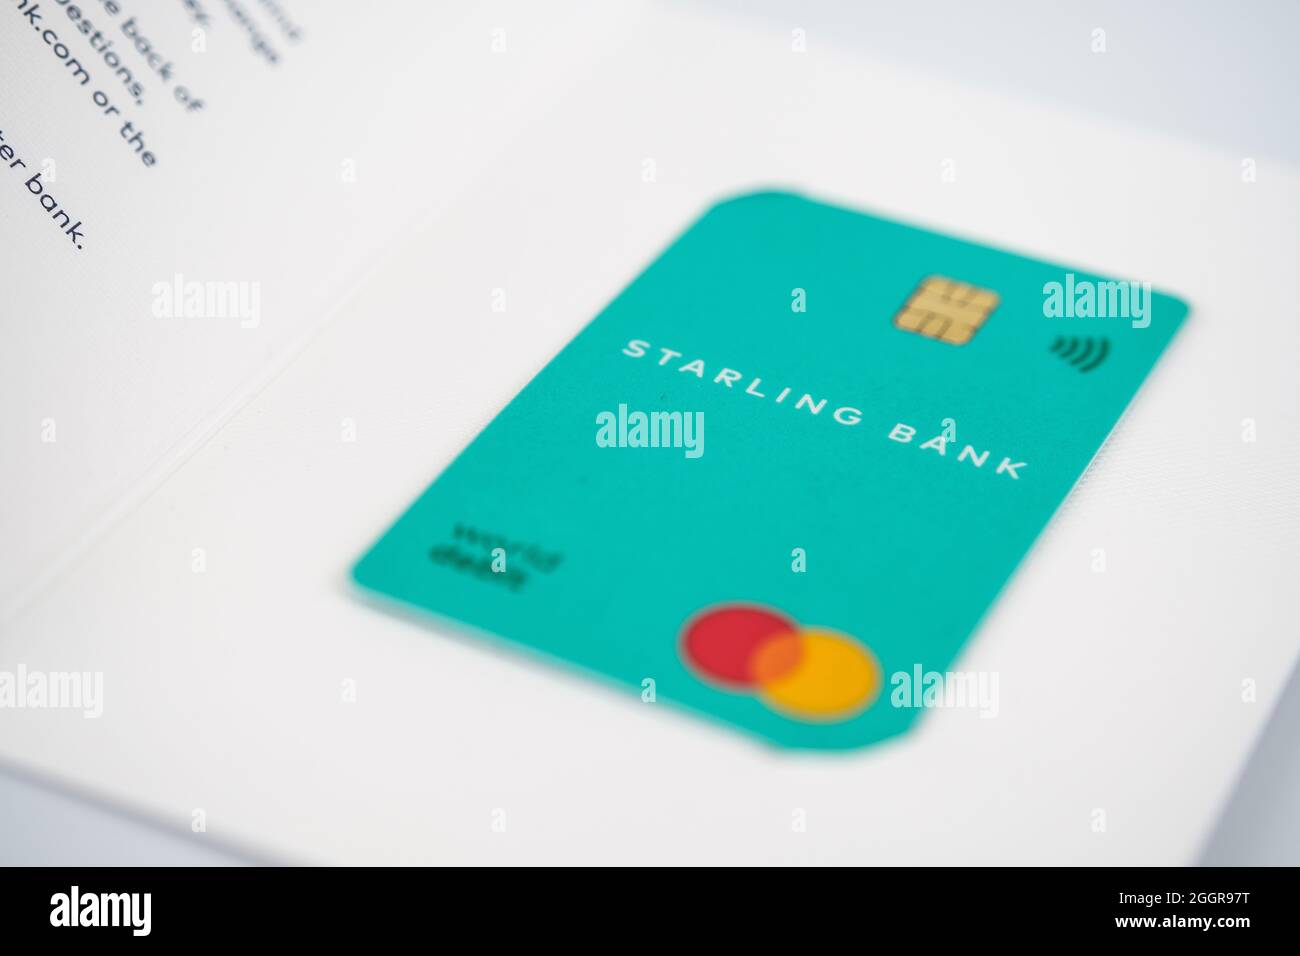 Starling Bank Debitkarte im Umschlag, der per Post erhalten wurde. Mobile App-basierte Bank. Selektiver Fokus. Stafford, Großbritannien, 2. September 2021. Stockfoto